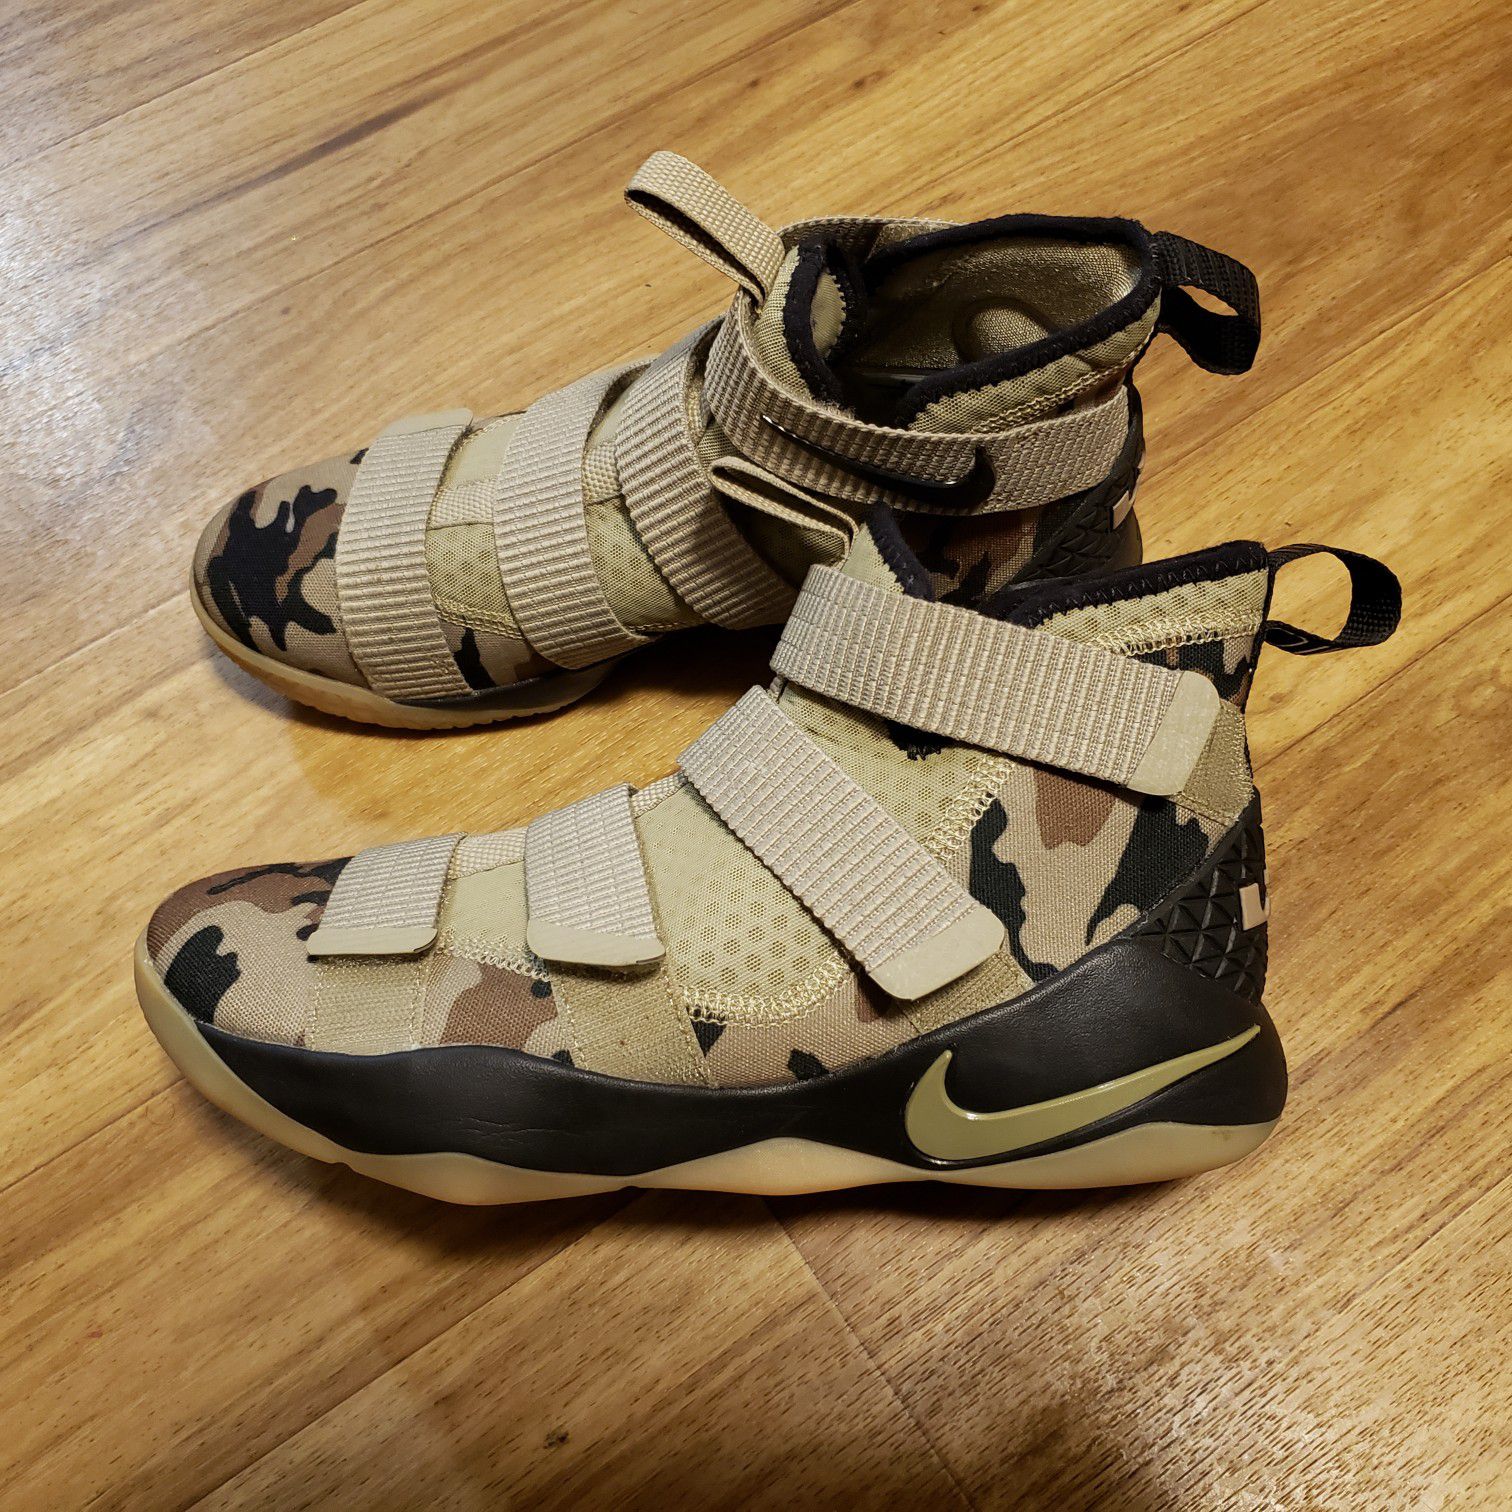 Men's Nike Lebron Camo Shoes size 8.5... $90